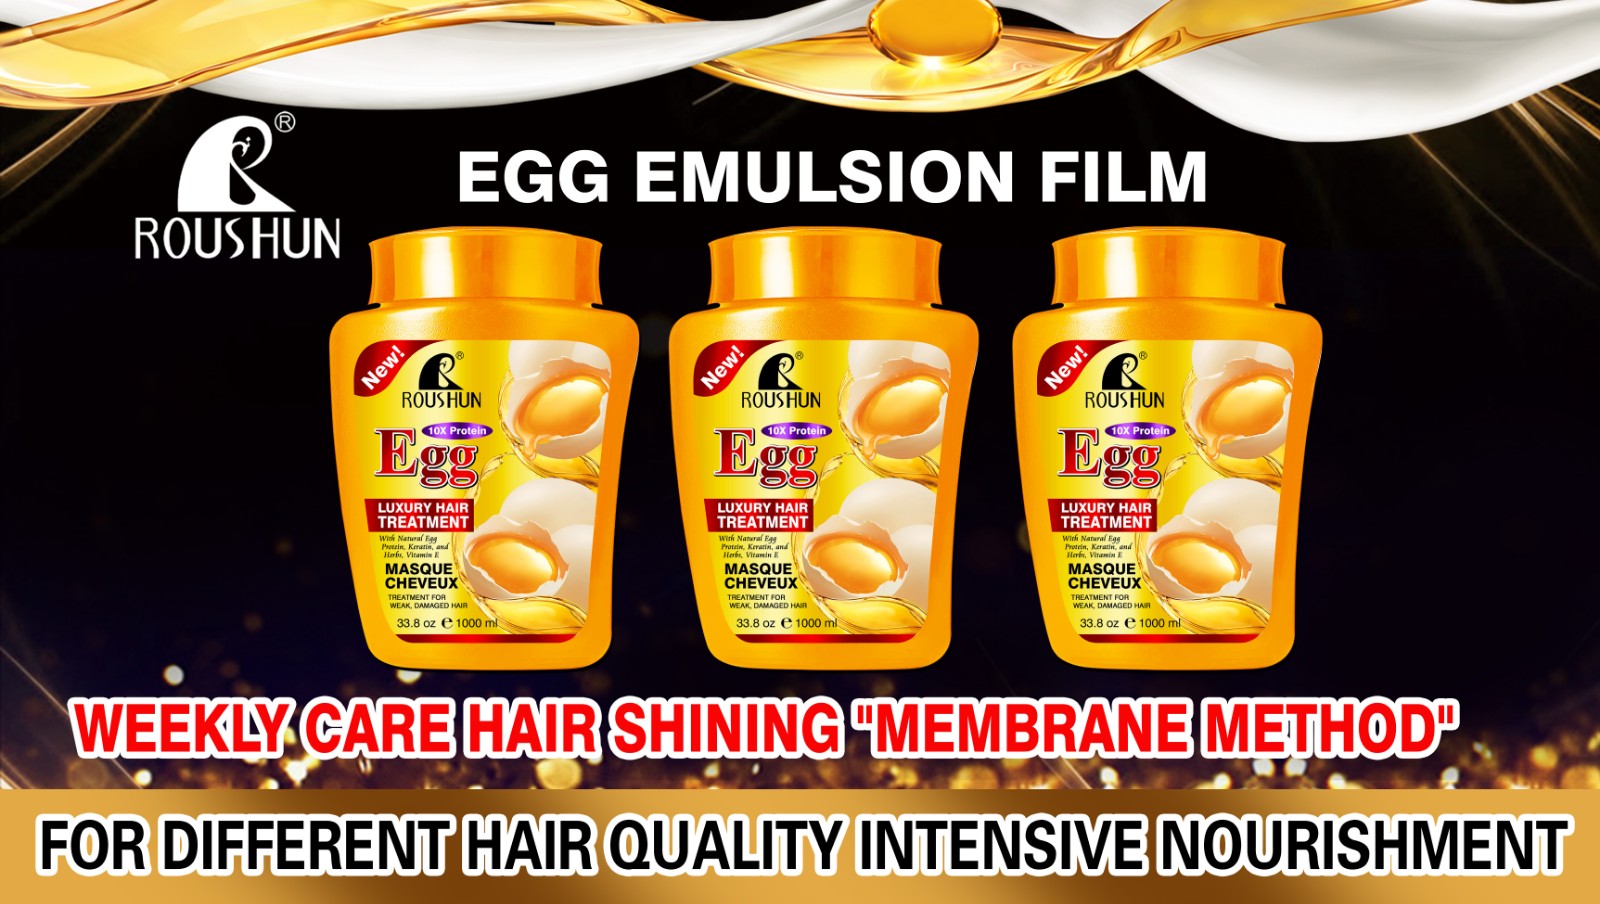 Egg hair treatment